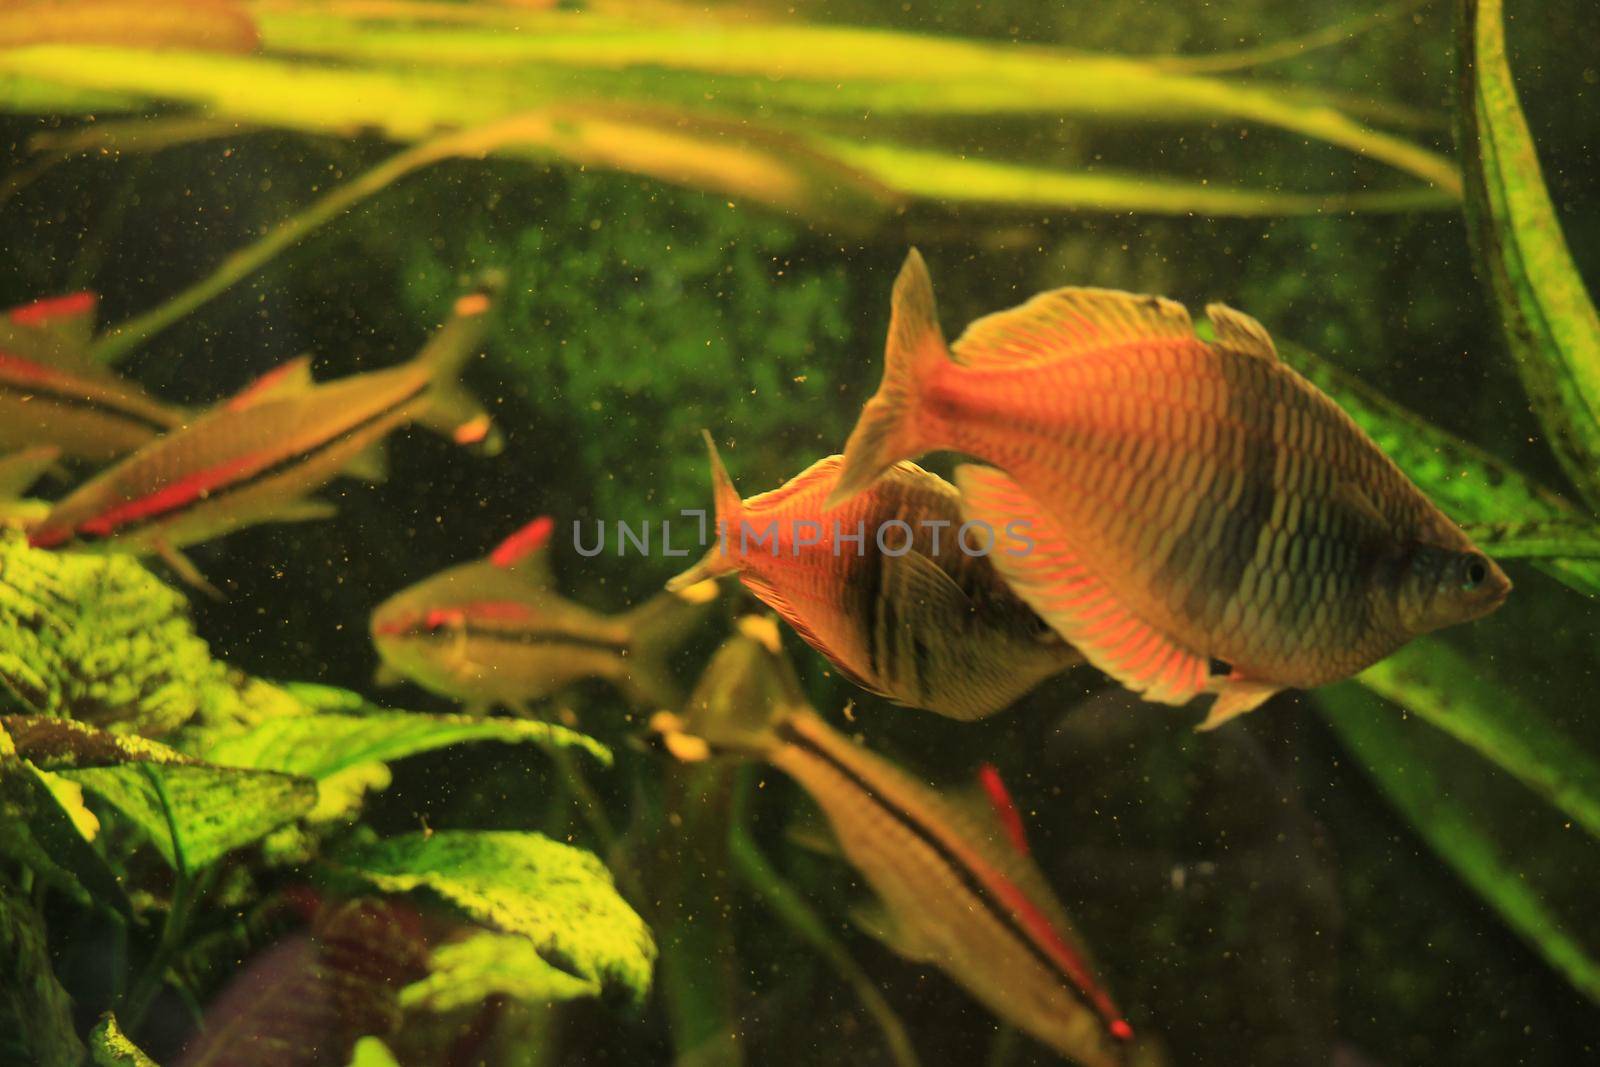 Gourami fishes in a big fish tank by studioportosabbia